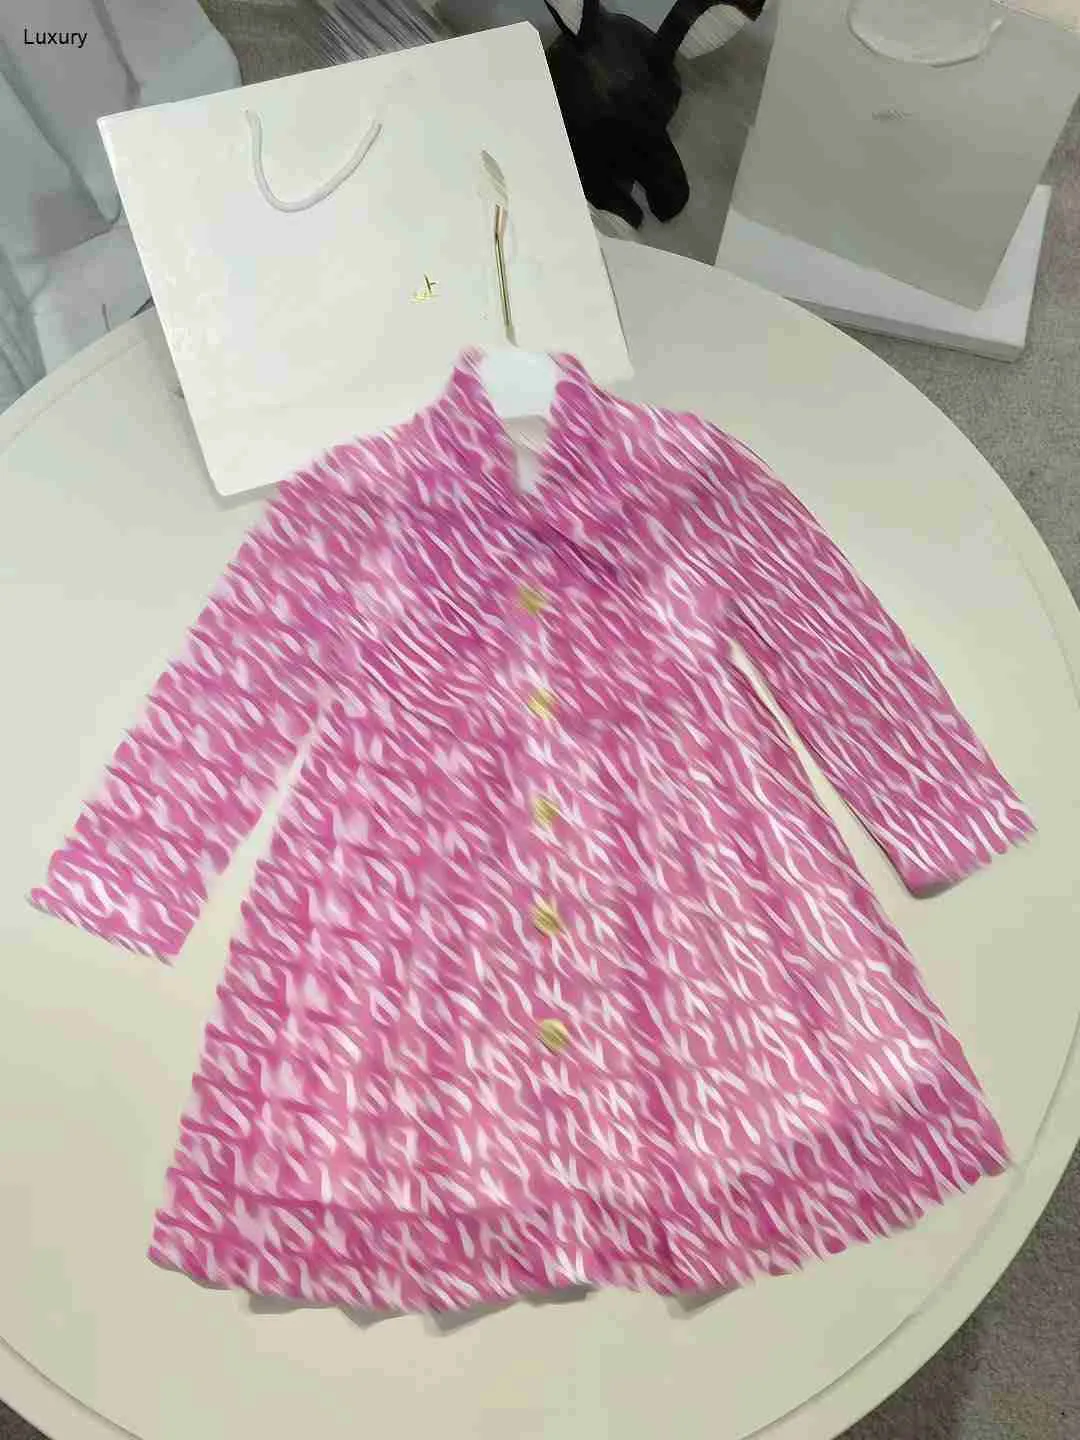 Luxury baby dresses White letters printed all over girl skirt Size 110-160 chiffon materialchild dress designer toddler frock Dec20